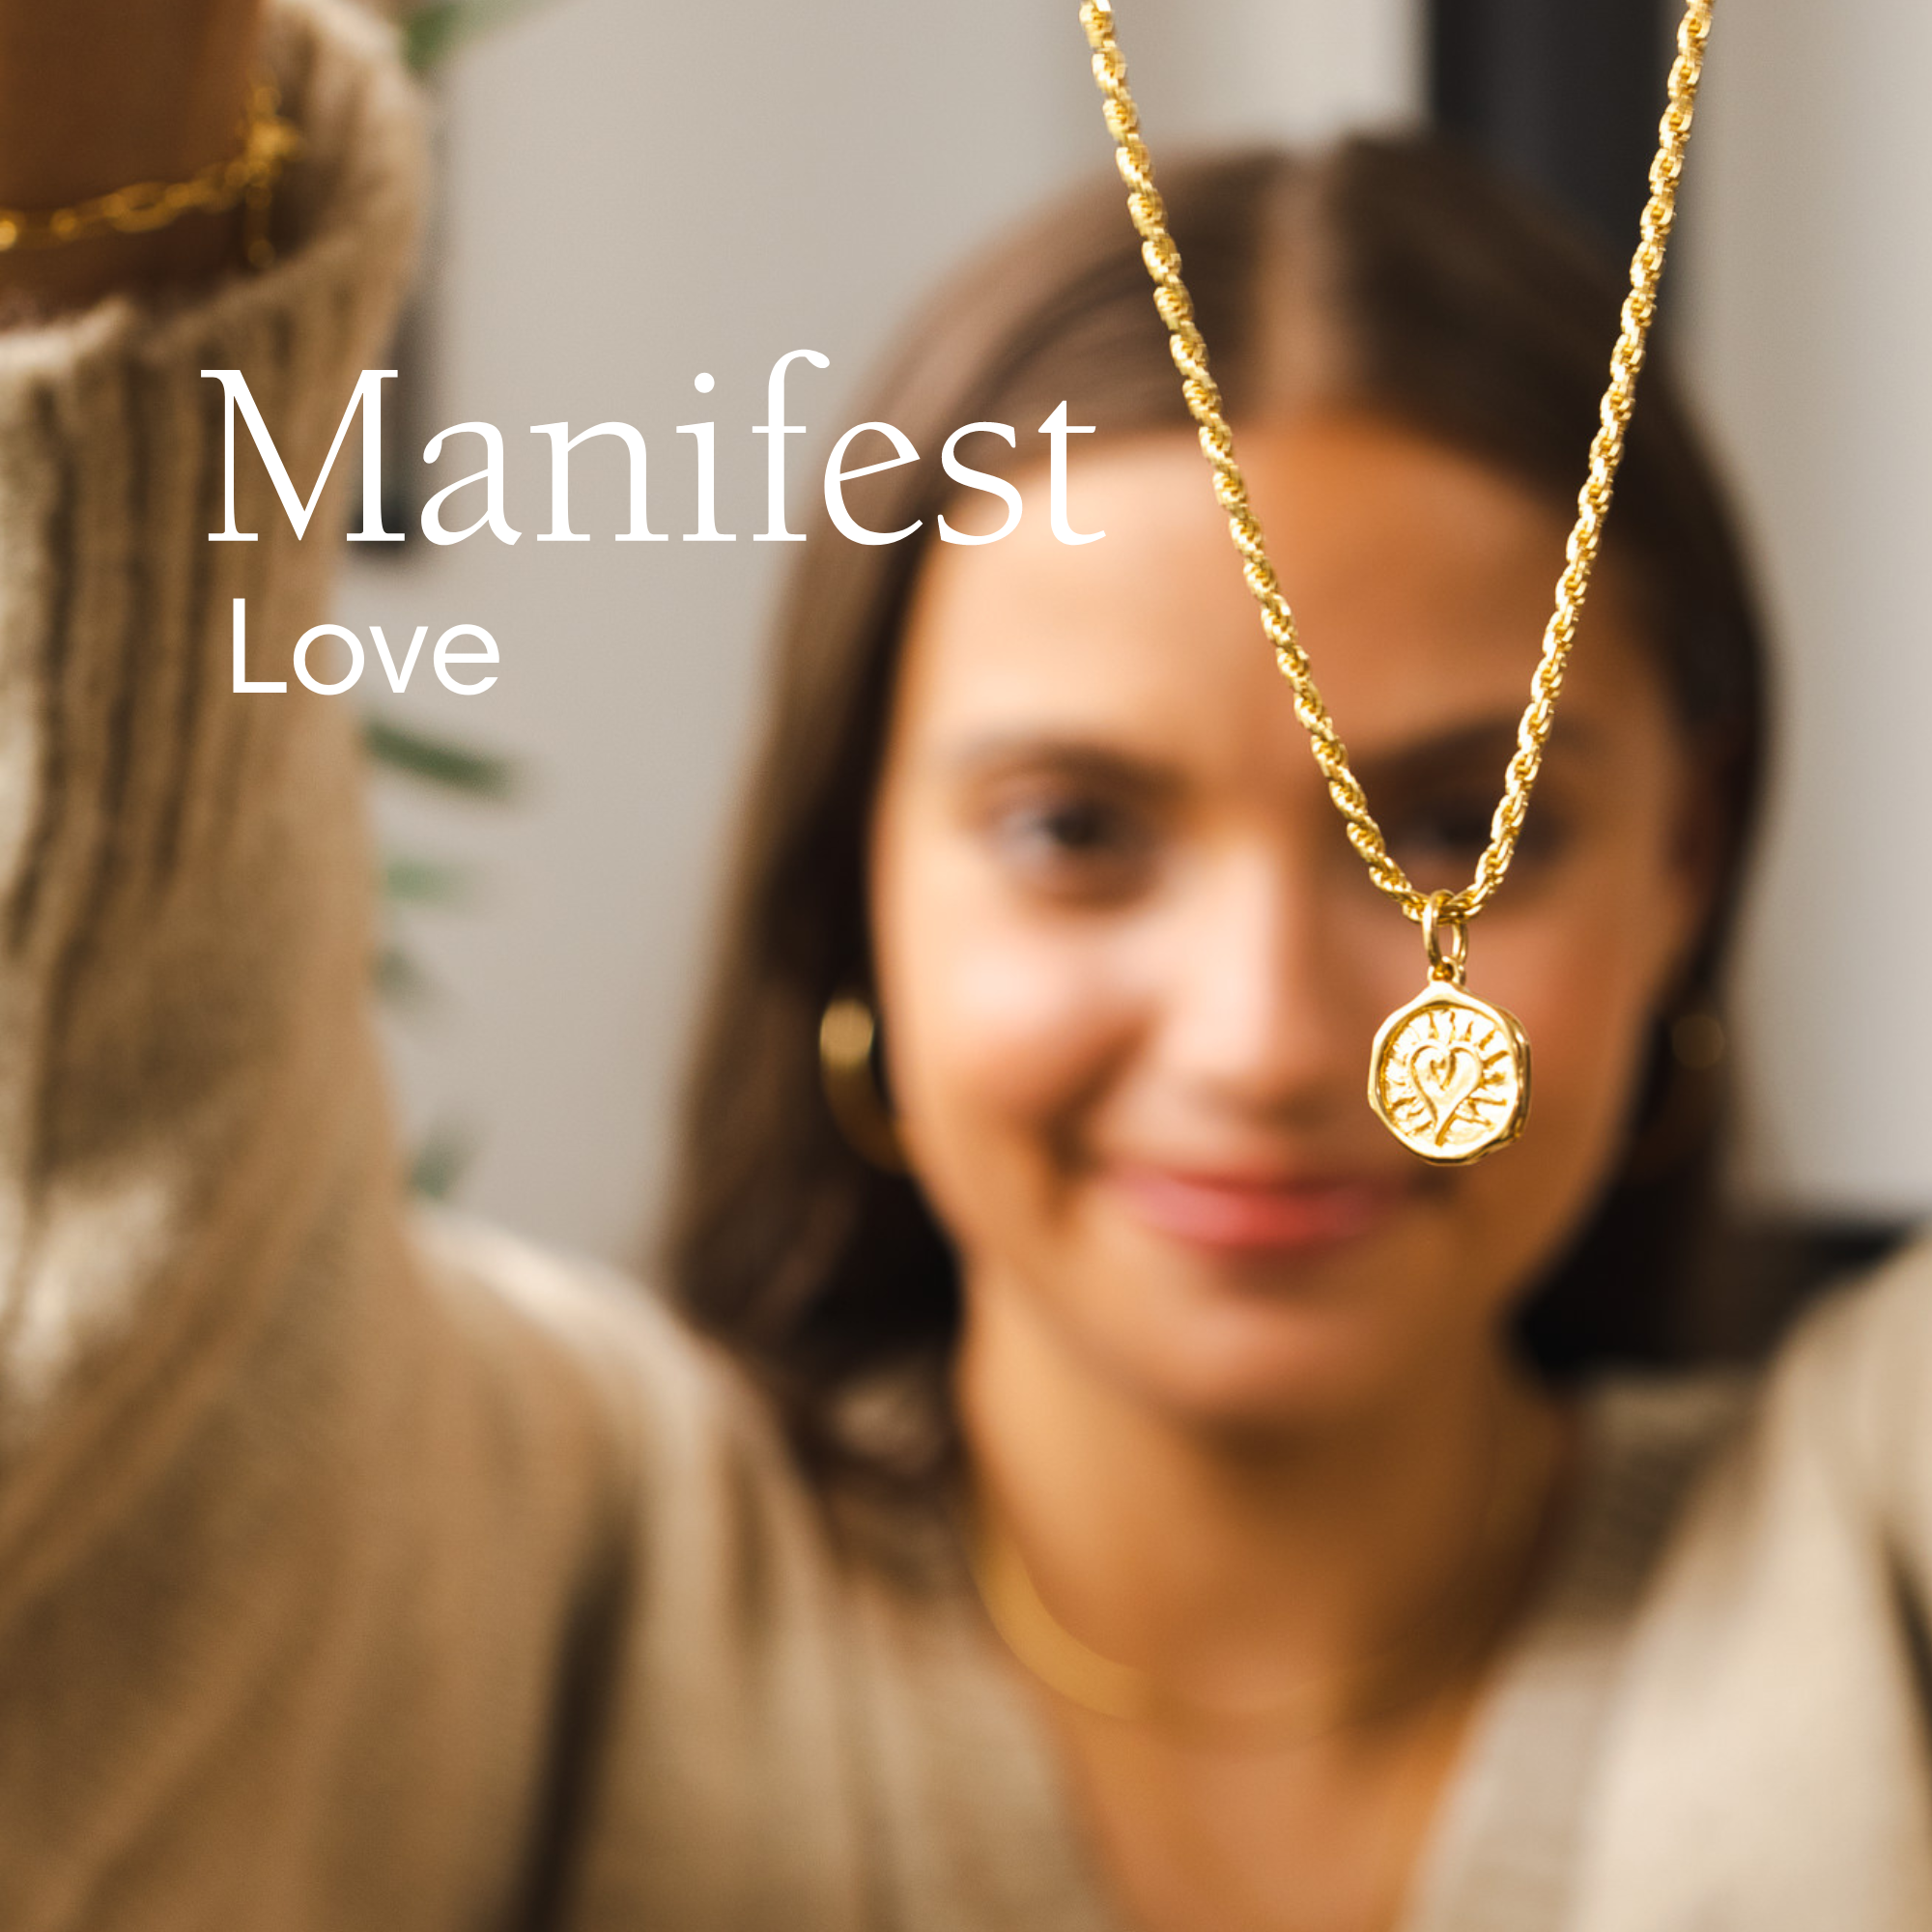 Manifest Love Necklace